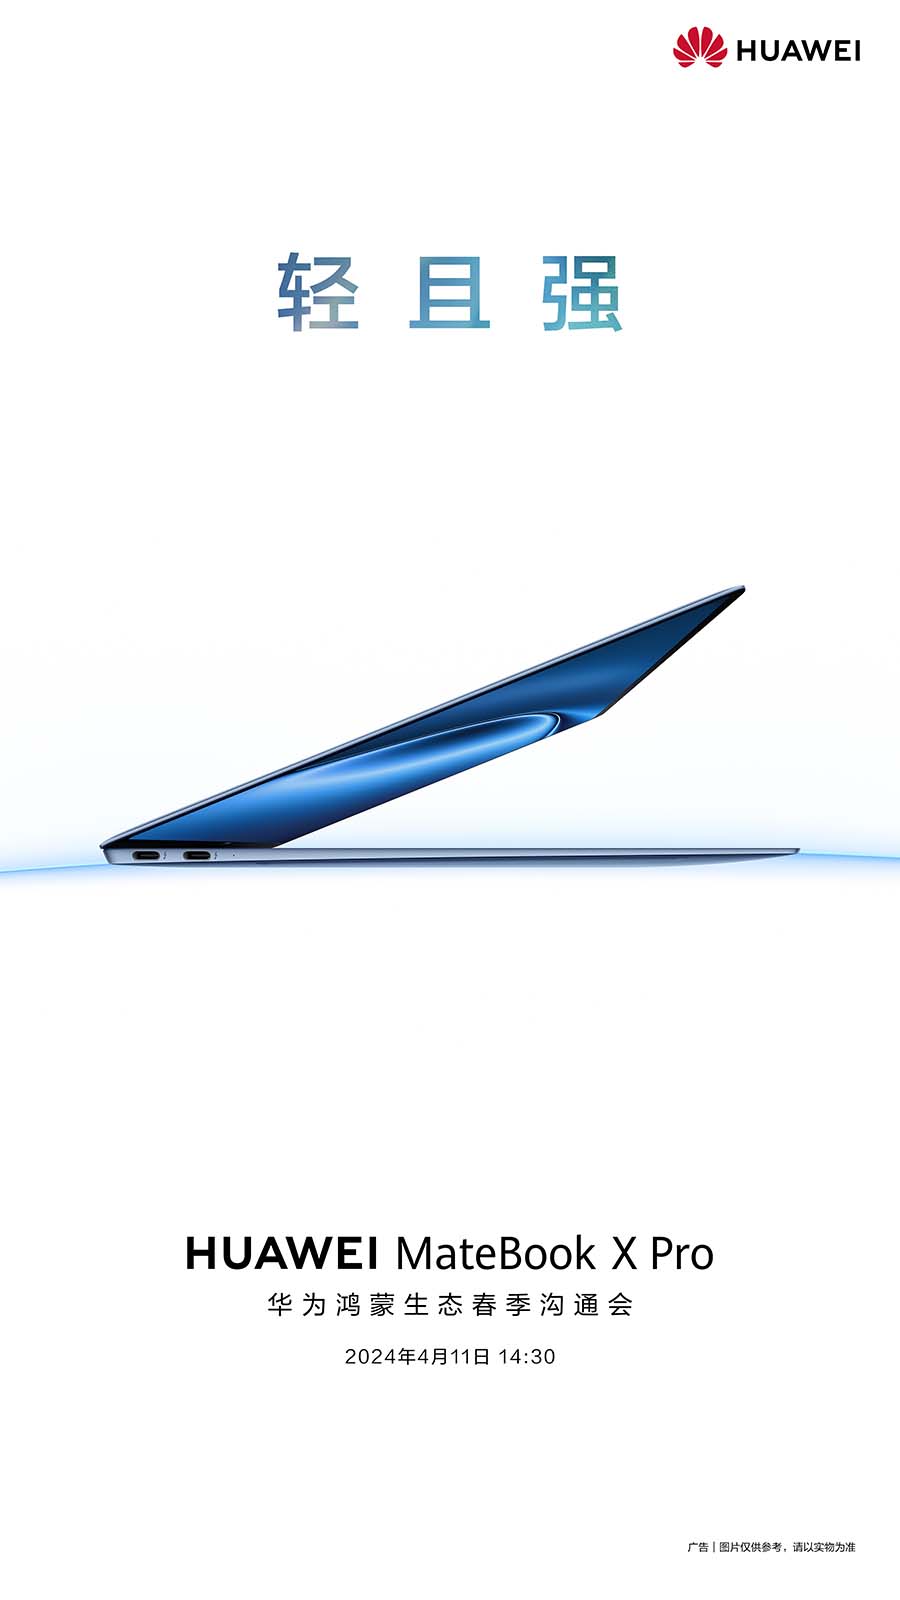 Huawei MateBook X Pro 2024